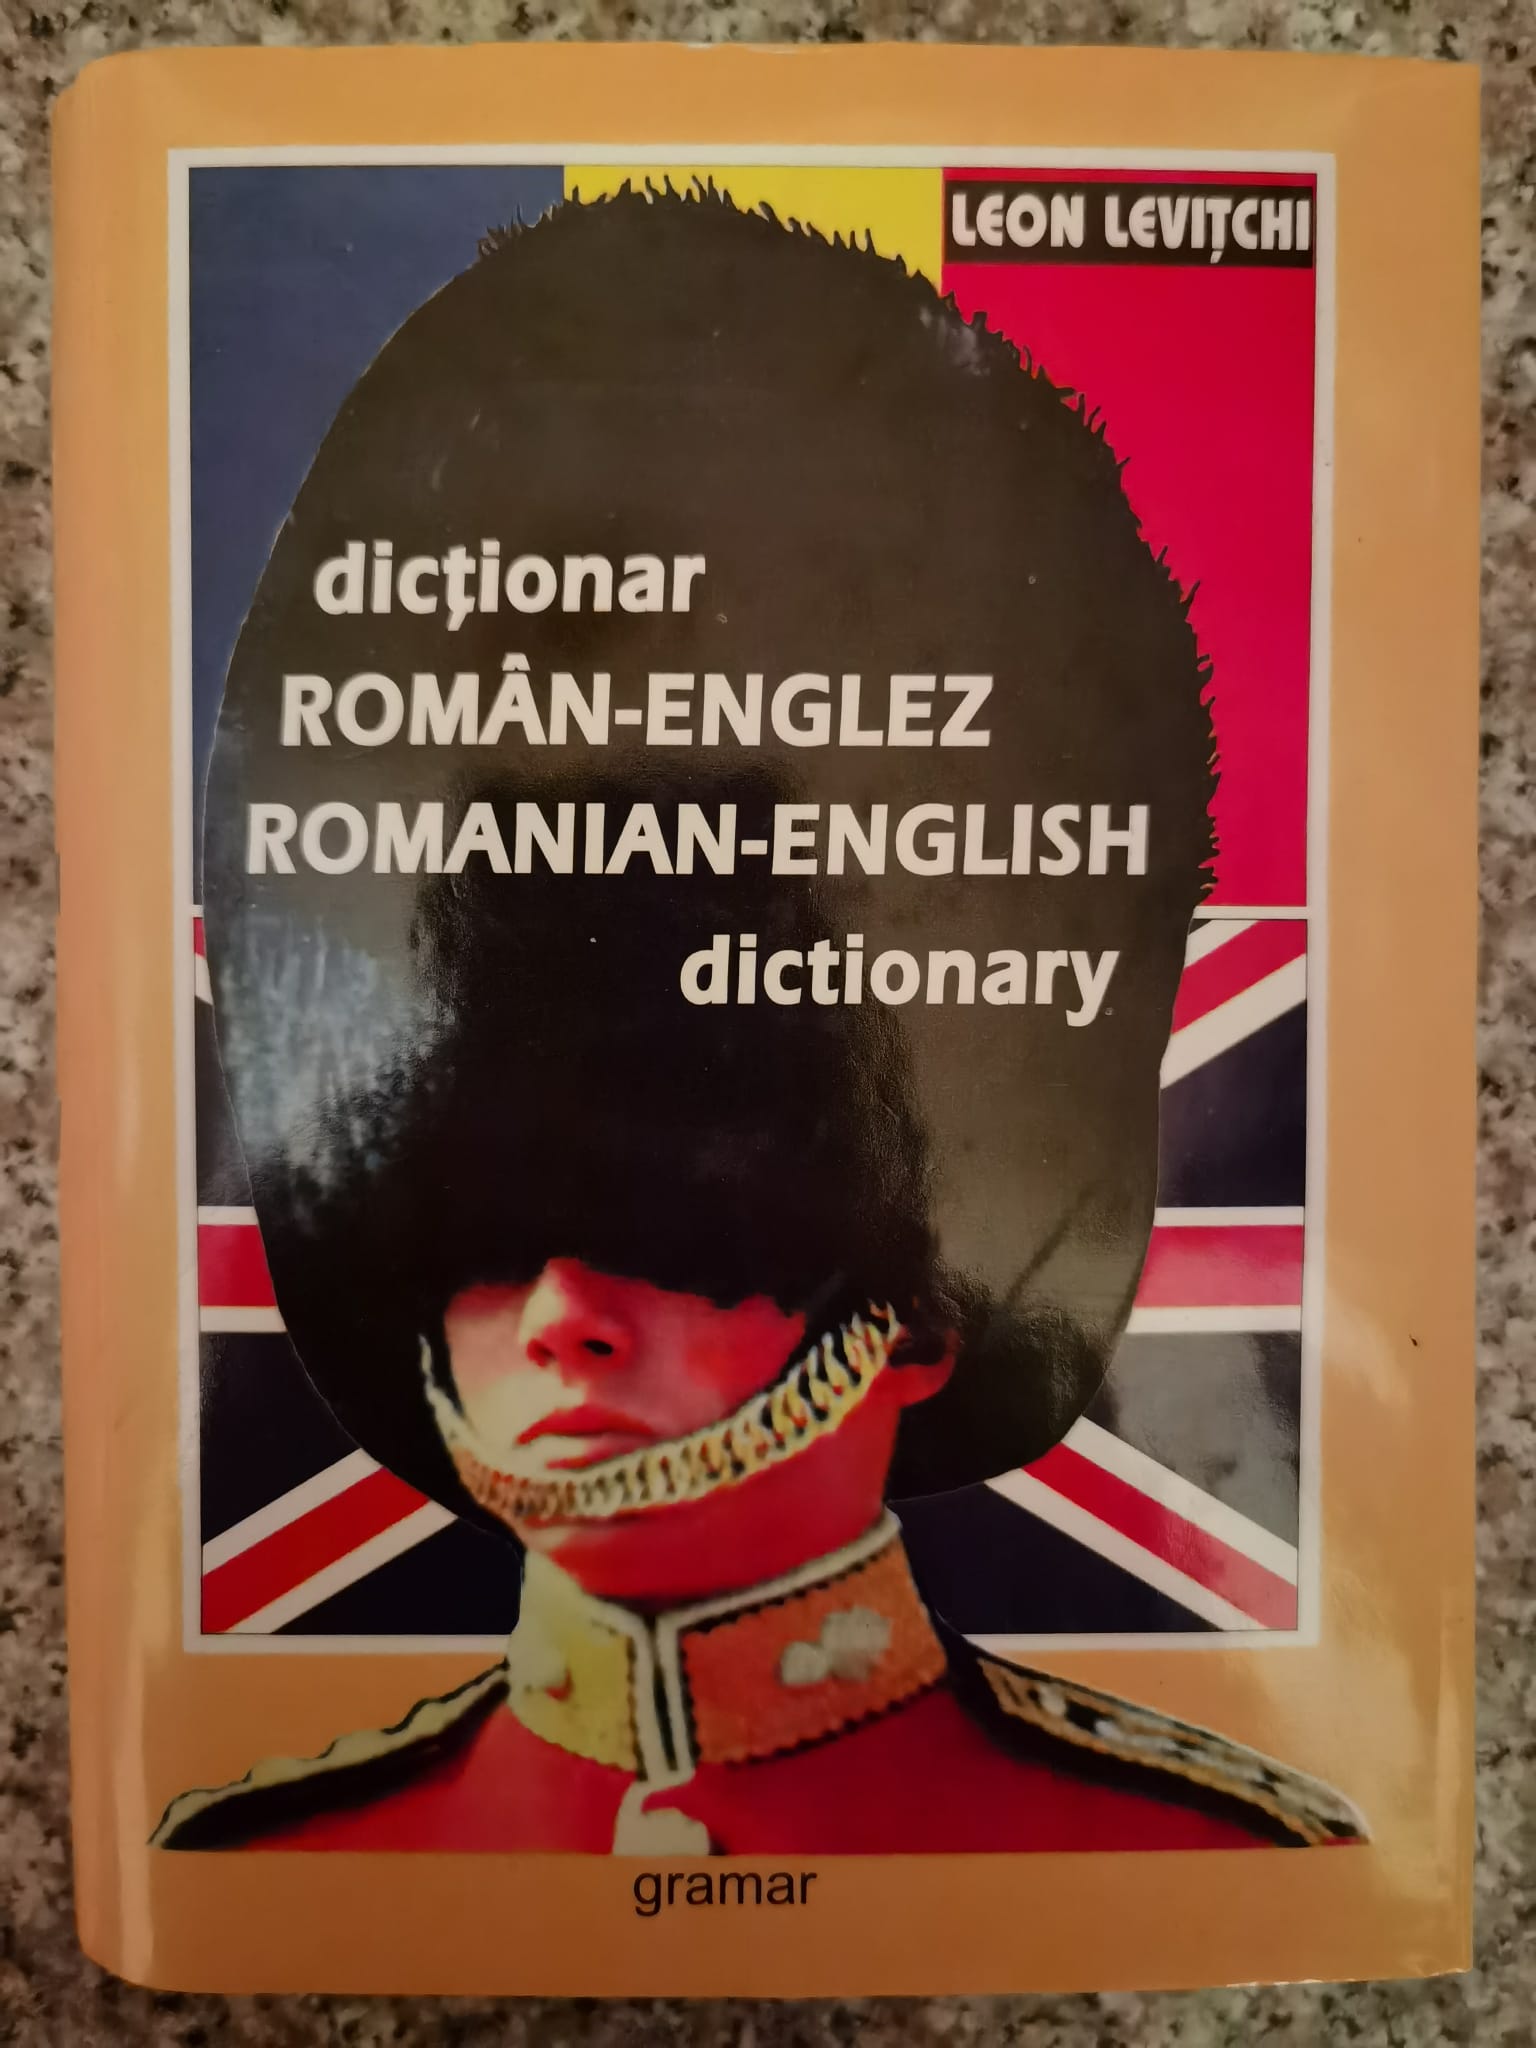 dictionar roman-englez                                                                               leon levitchi                                                                                       